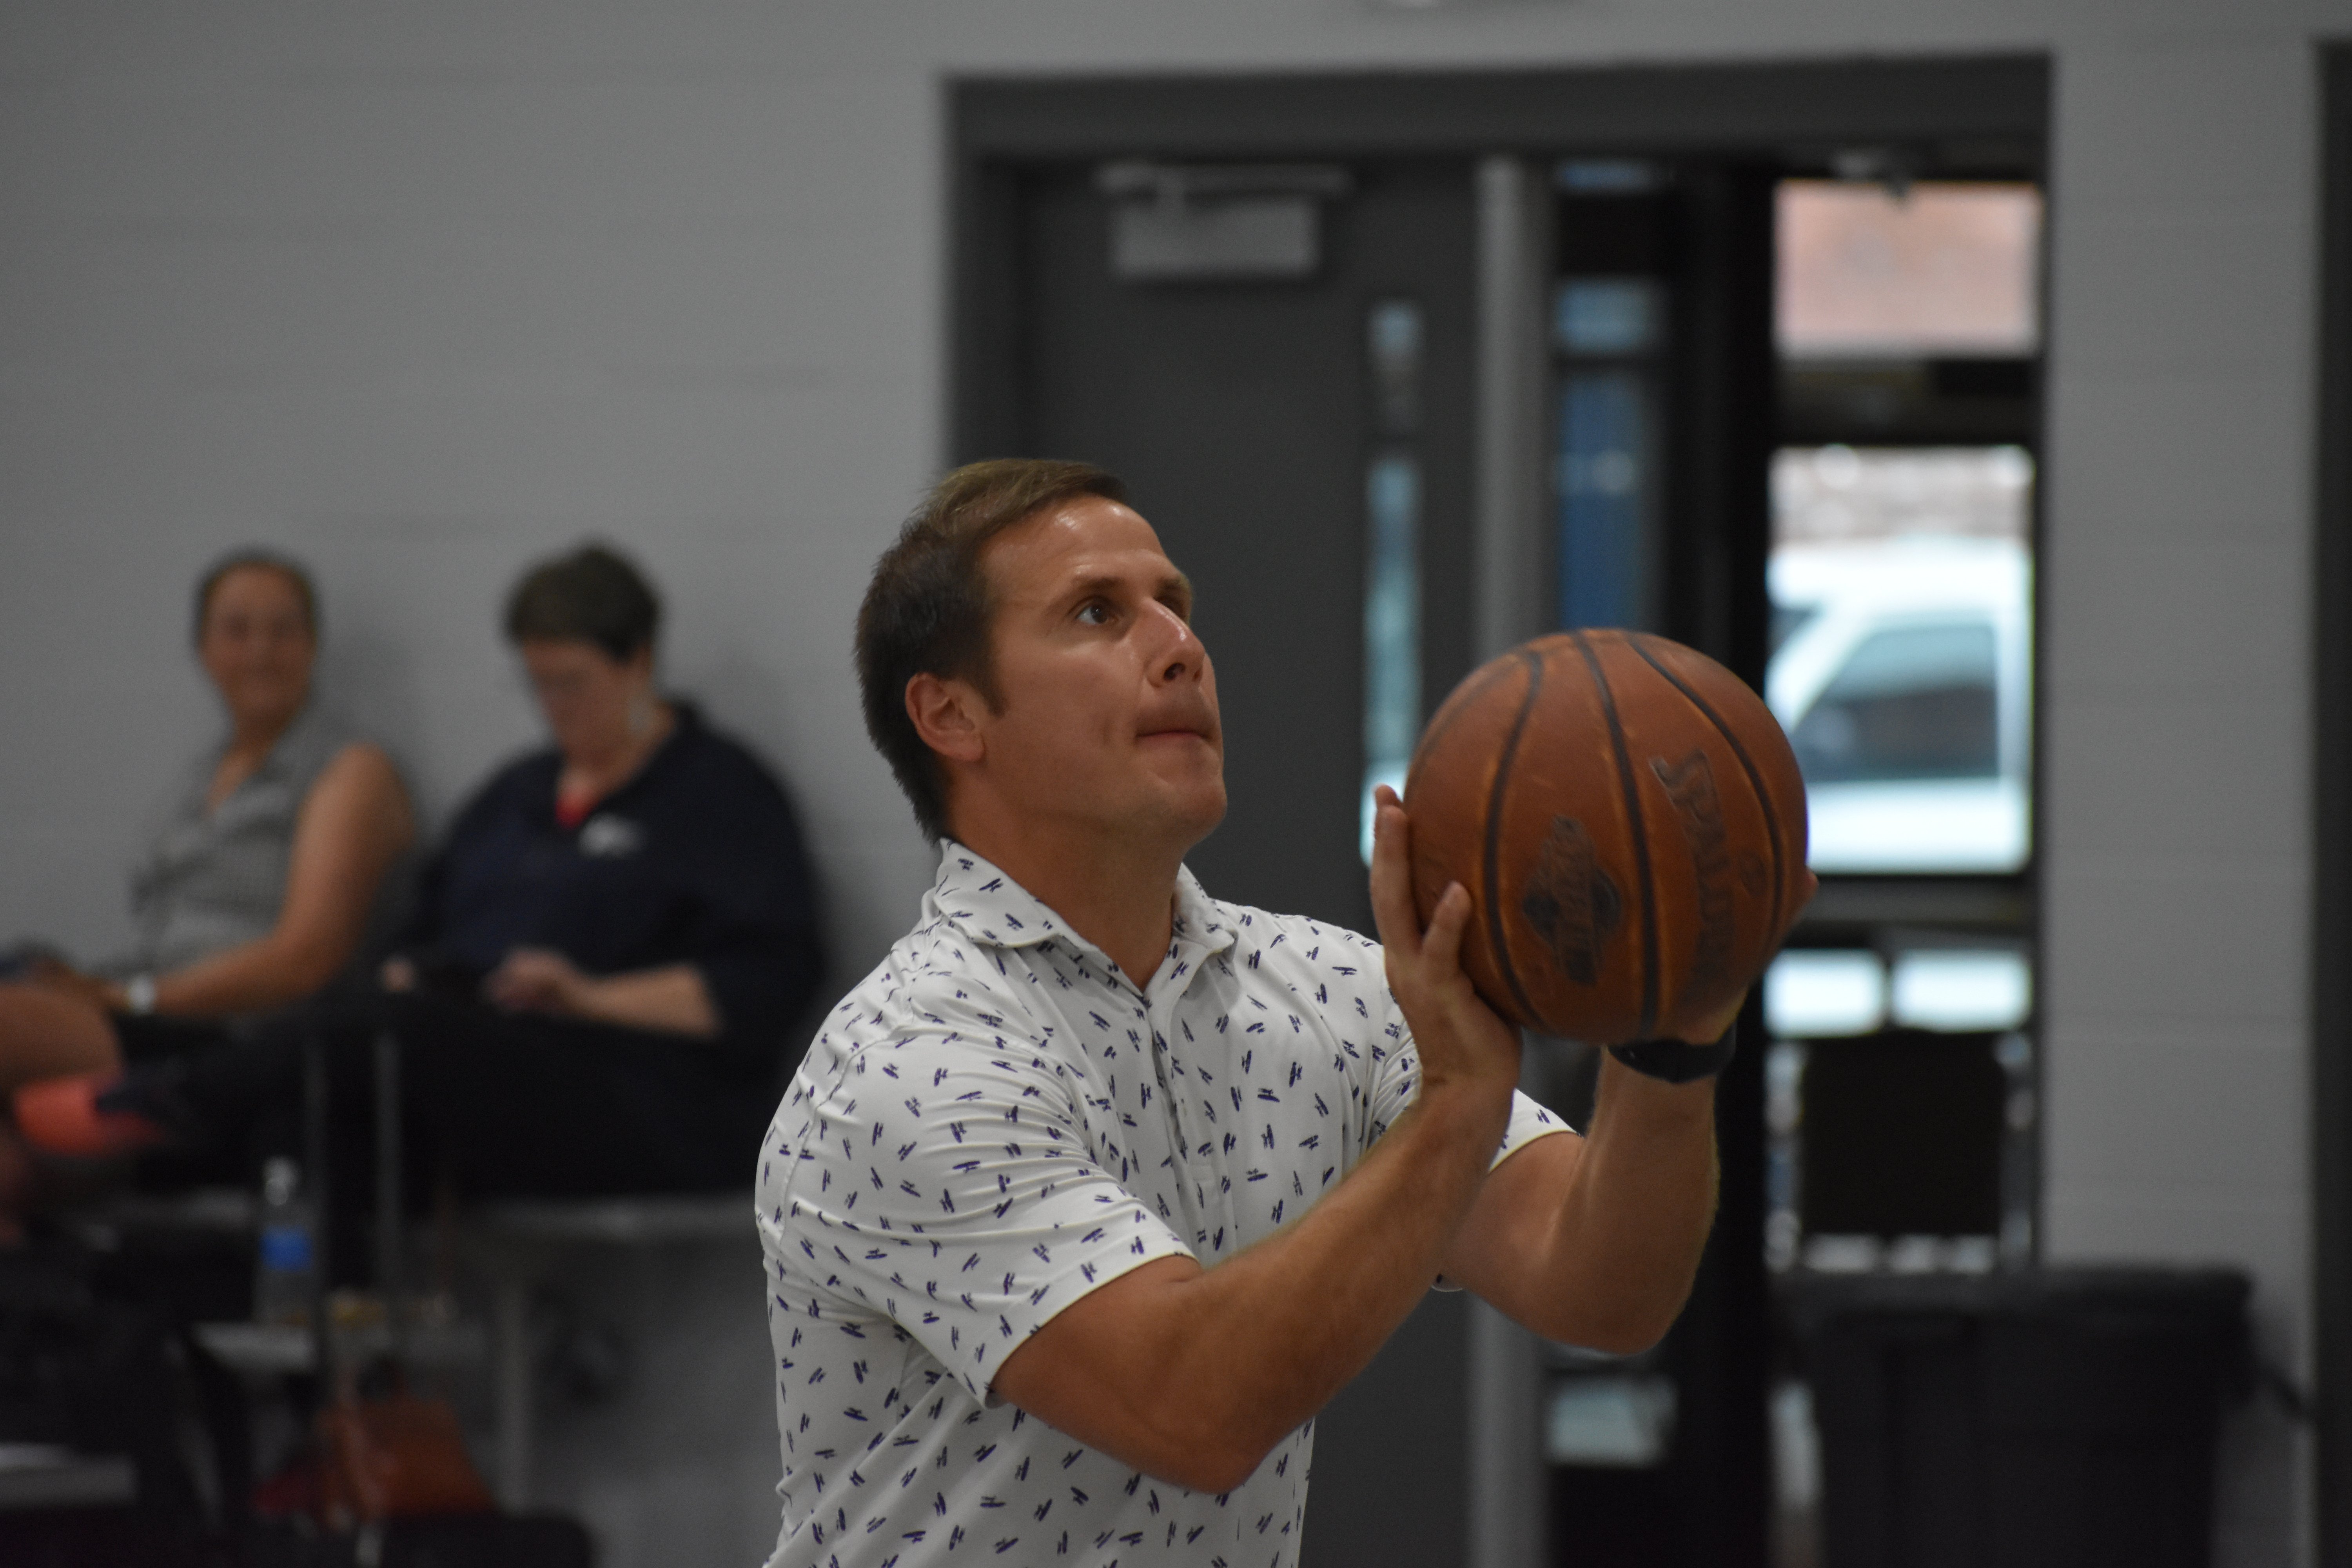 Peter Szostak lines up his basketball shot | Talent Development Hosts Building Leaders Alumni Event in Cincinnati